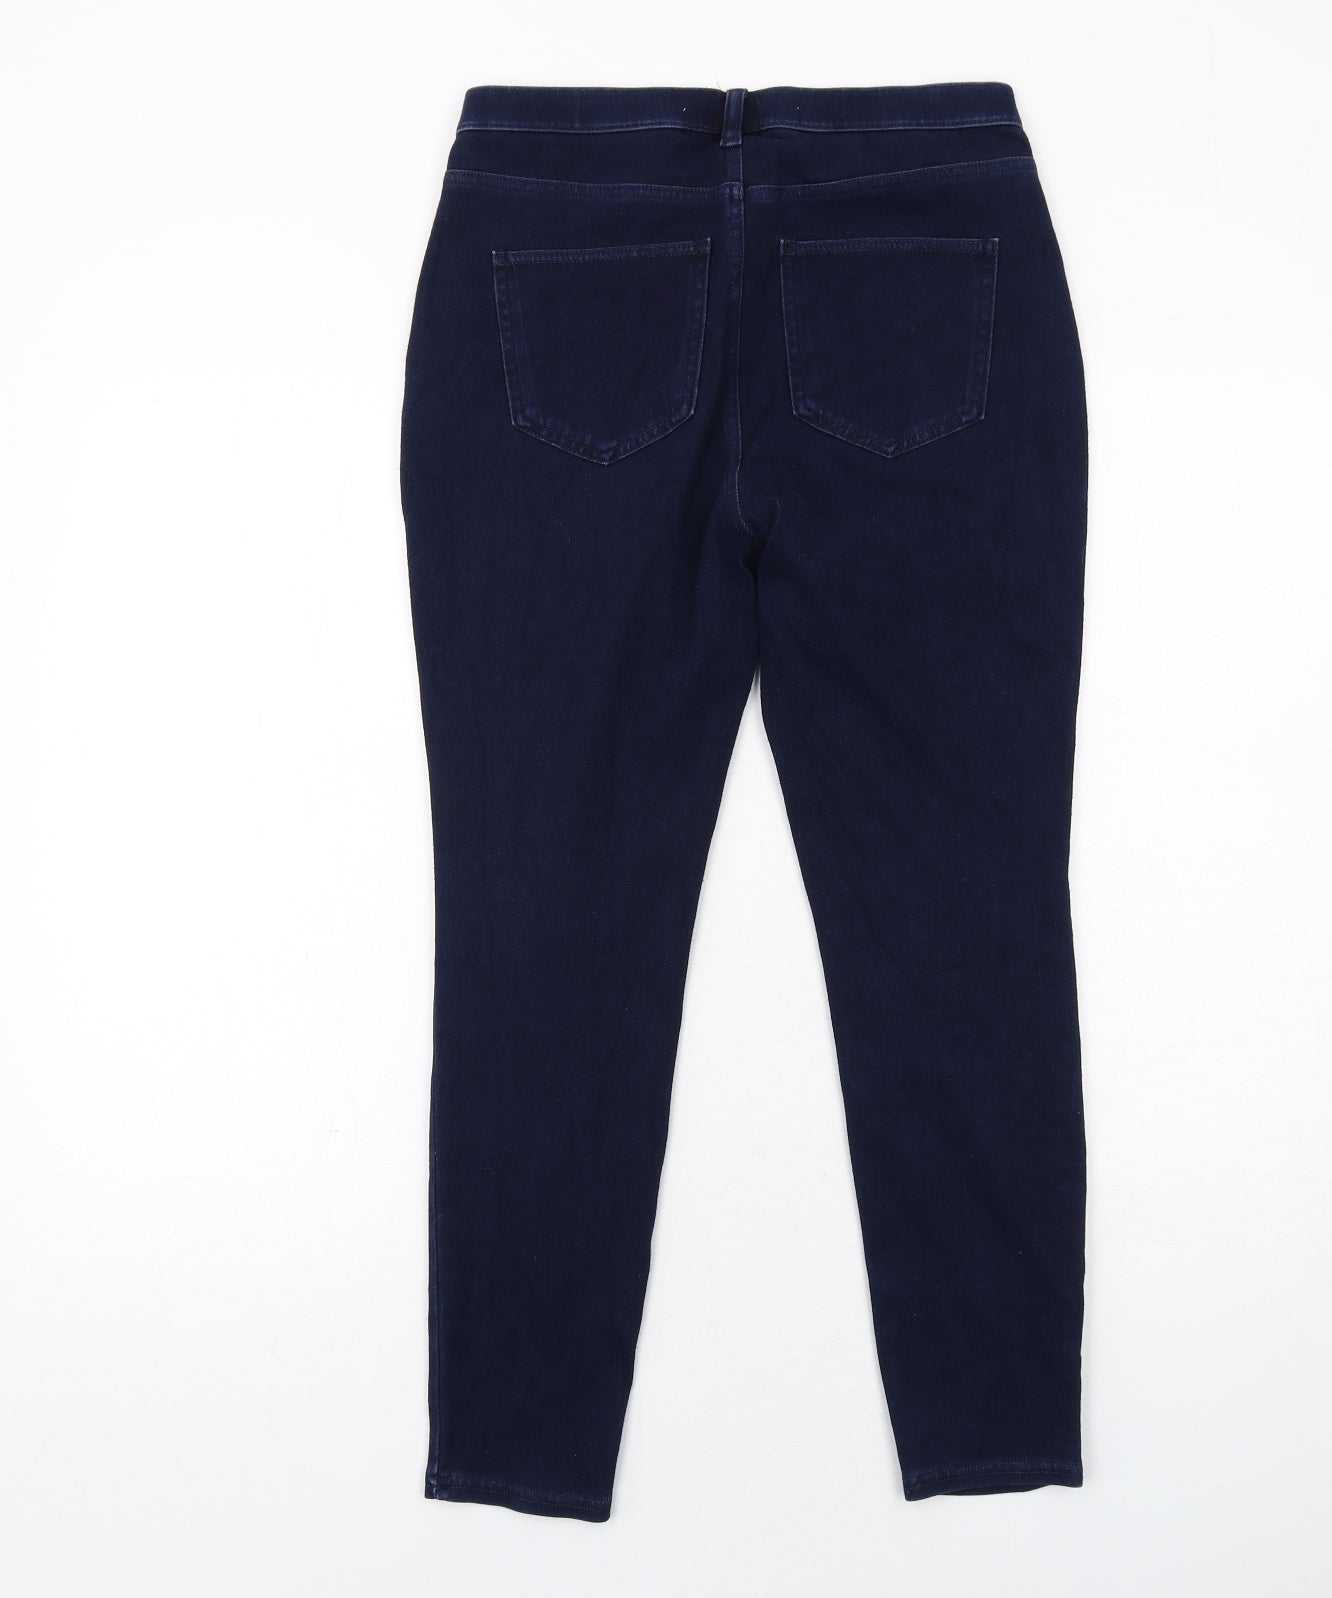 NEXT Womens Blue Cotton Jegging Jeans Size 12 Regular